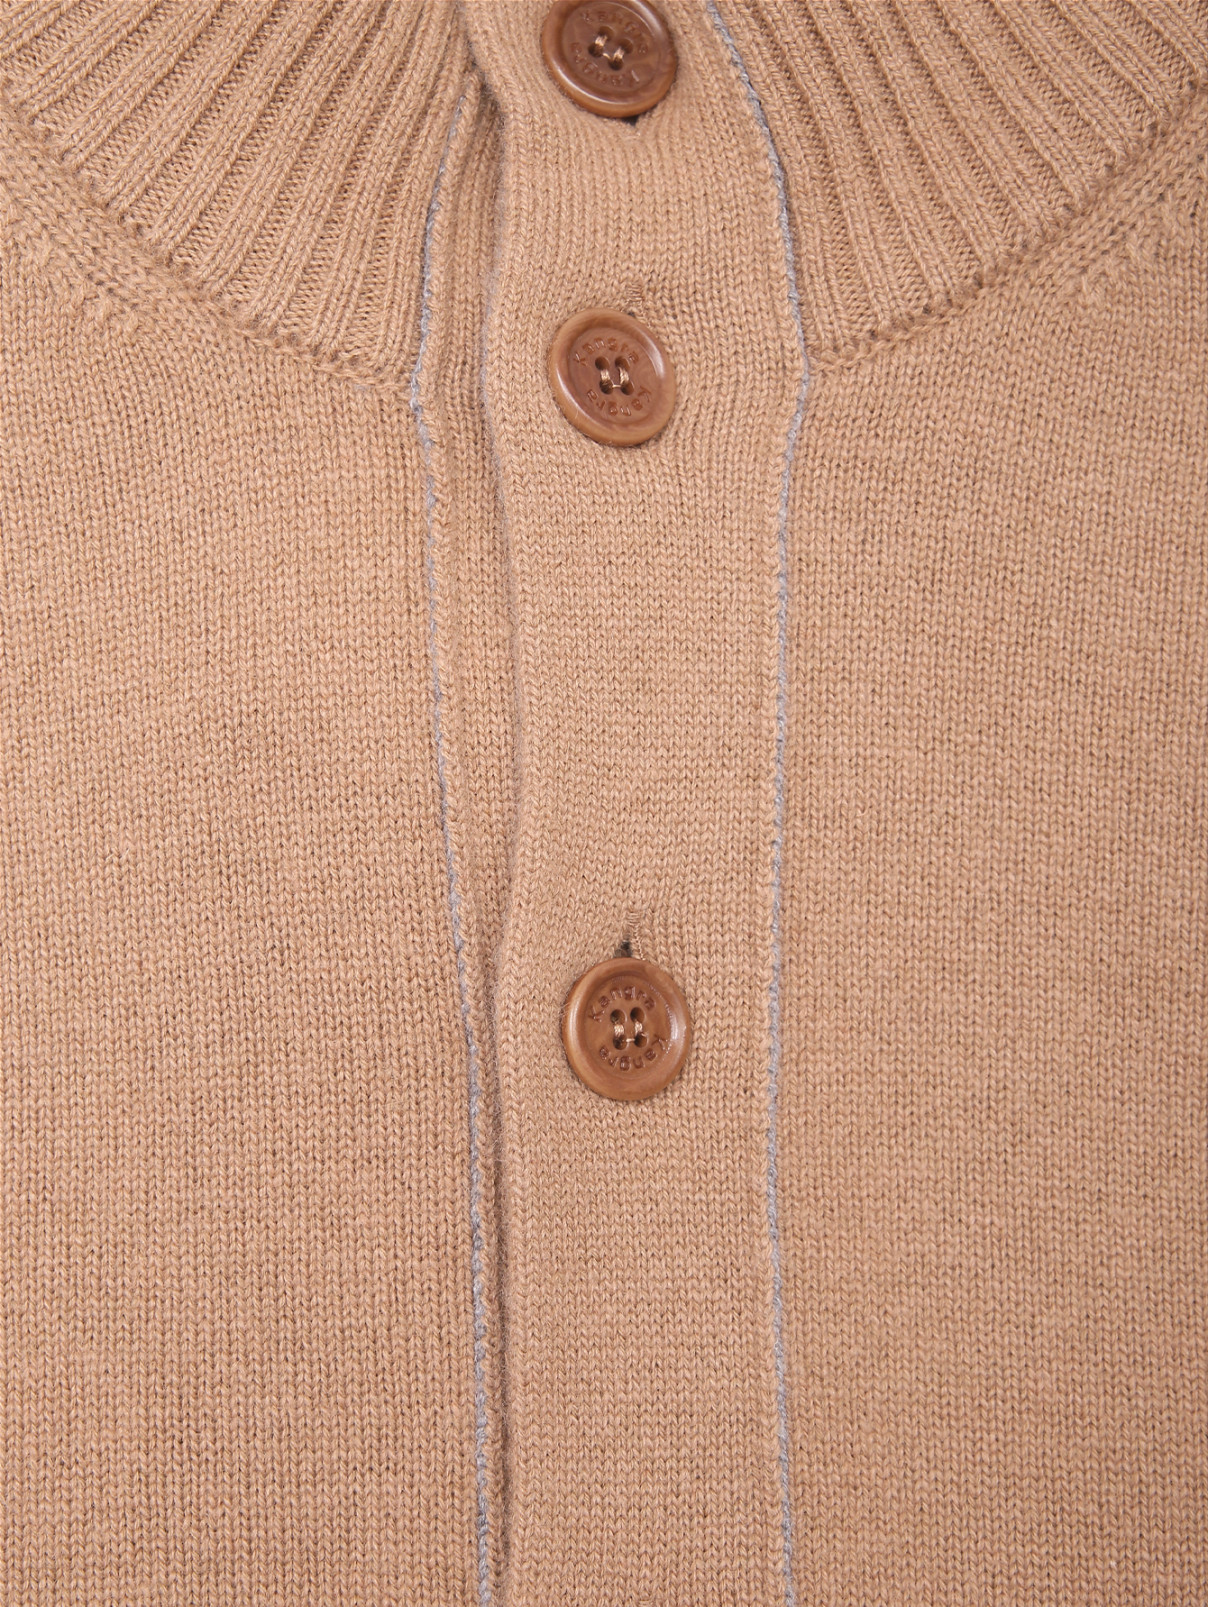 Кардиган из смешанной шерсти с карманами Kangra Cashmere  –  Деталь  – Цвет:  Бежевый